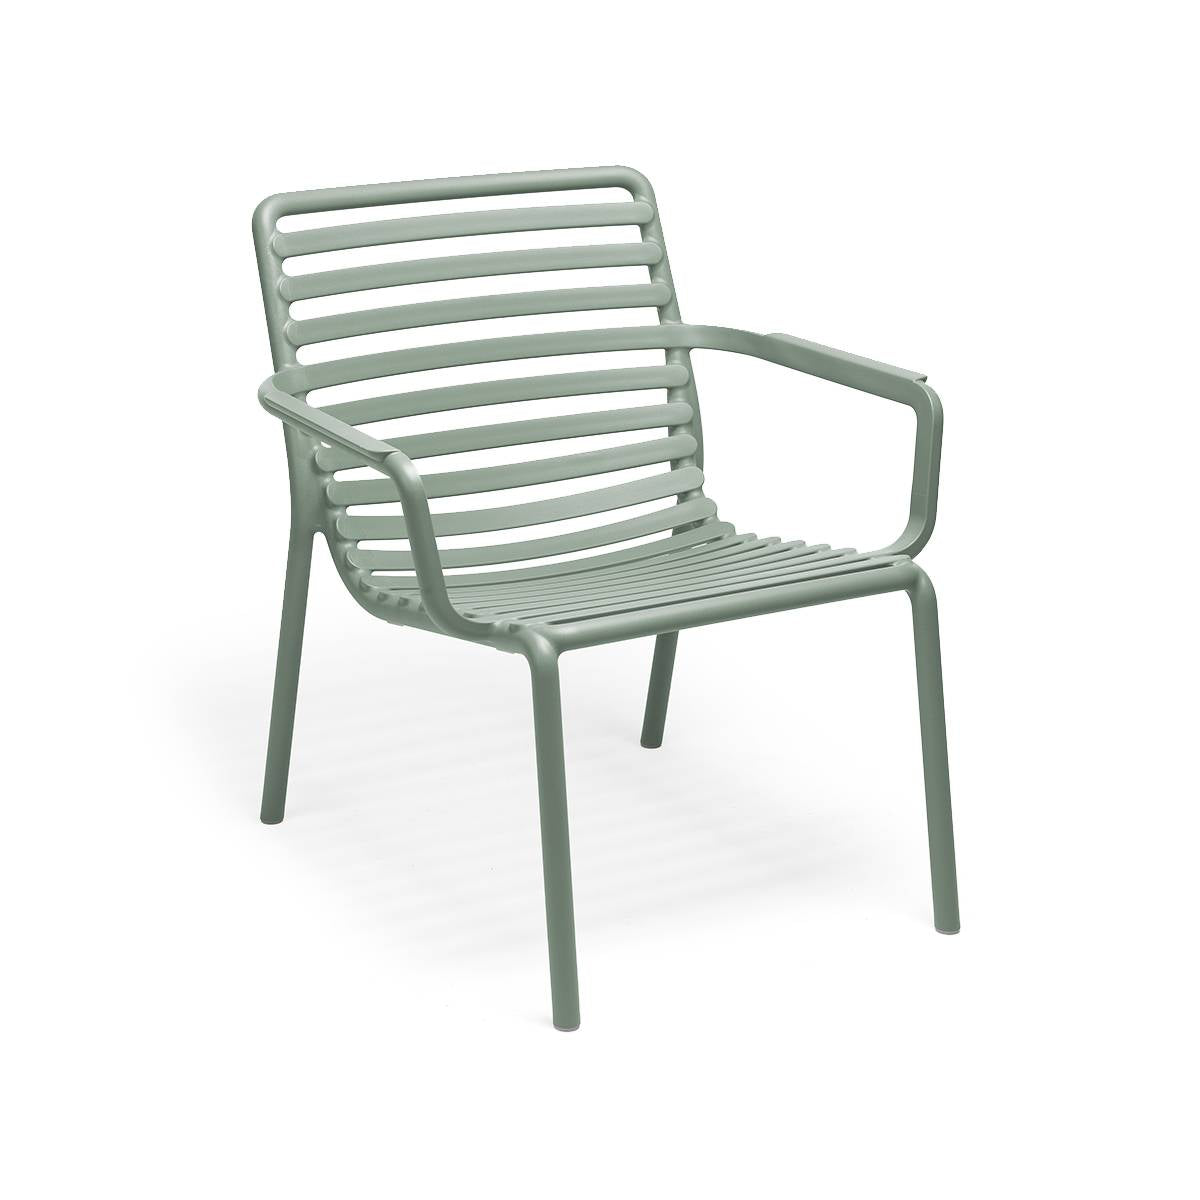 NARDI DOGA LOUNGE Chair [Set of 2]